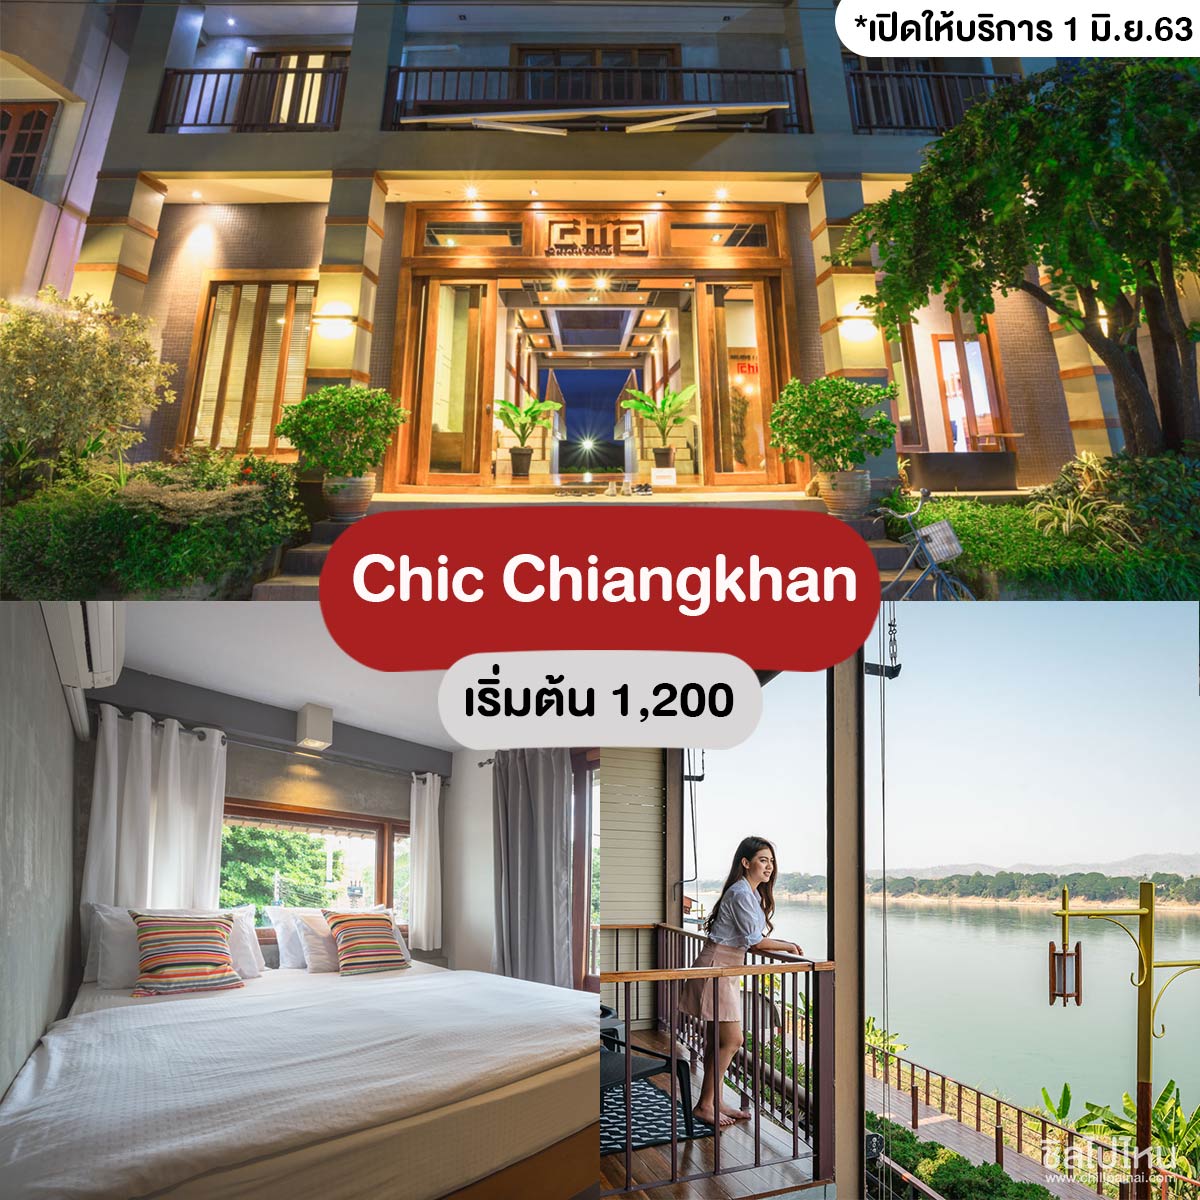 Chic Chiangkhan